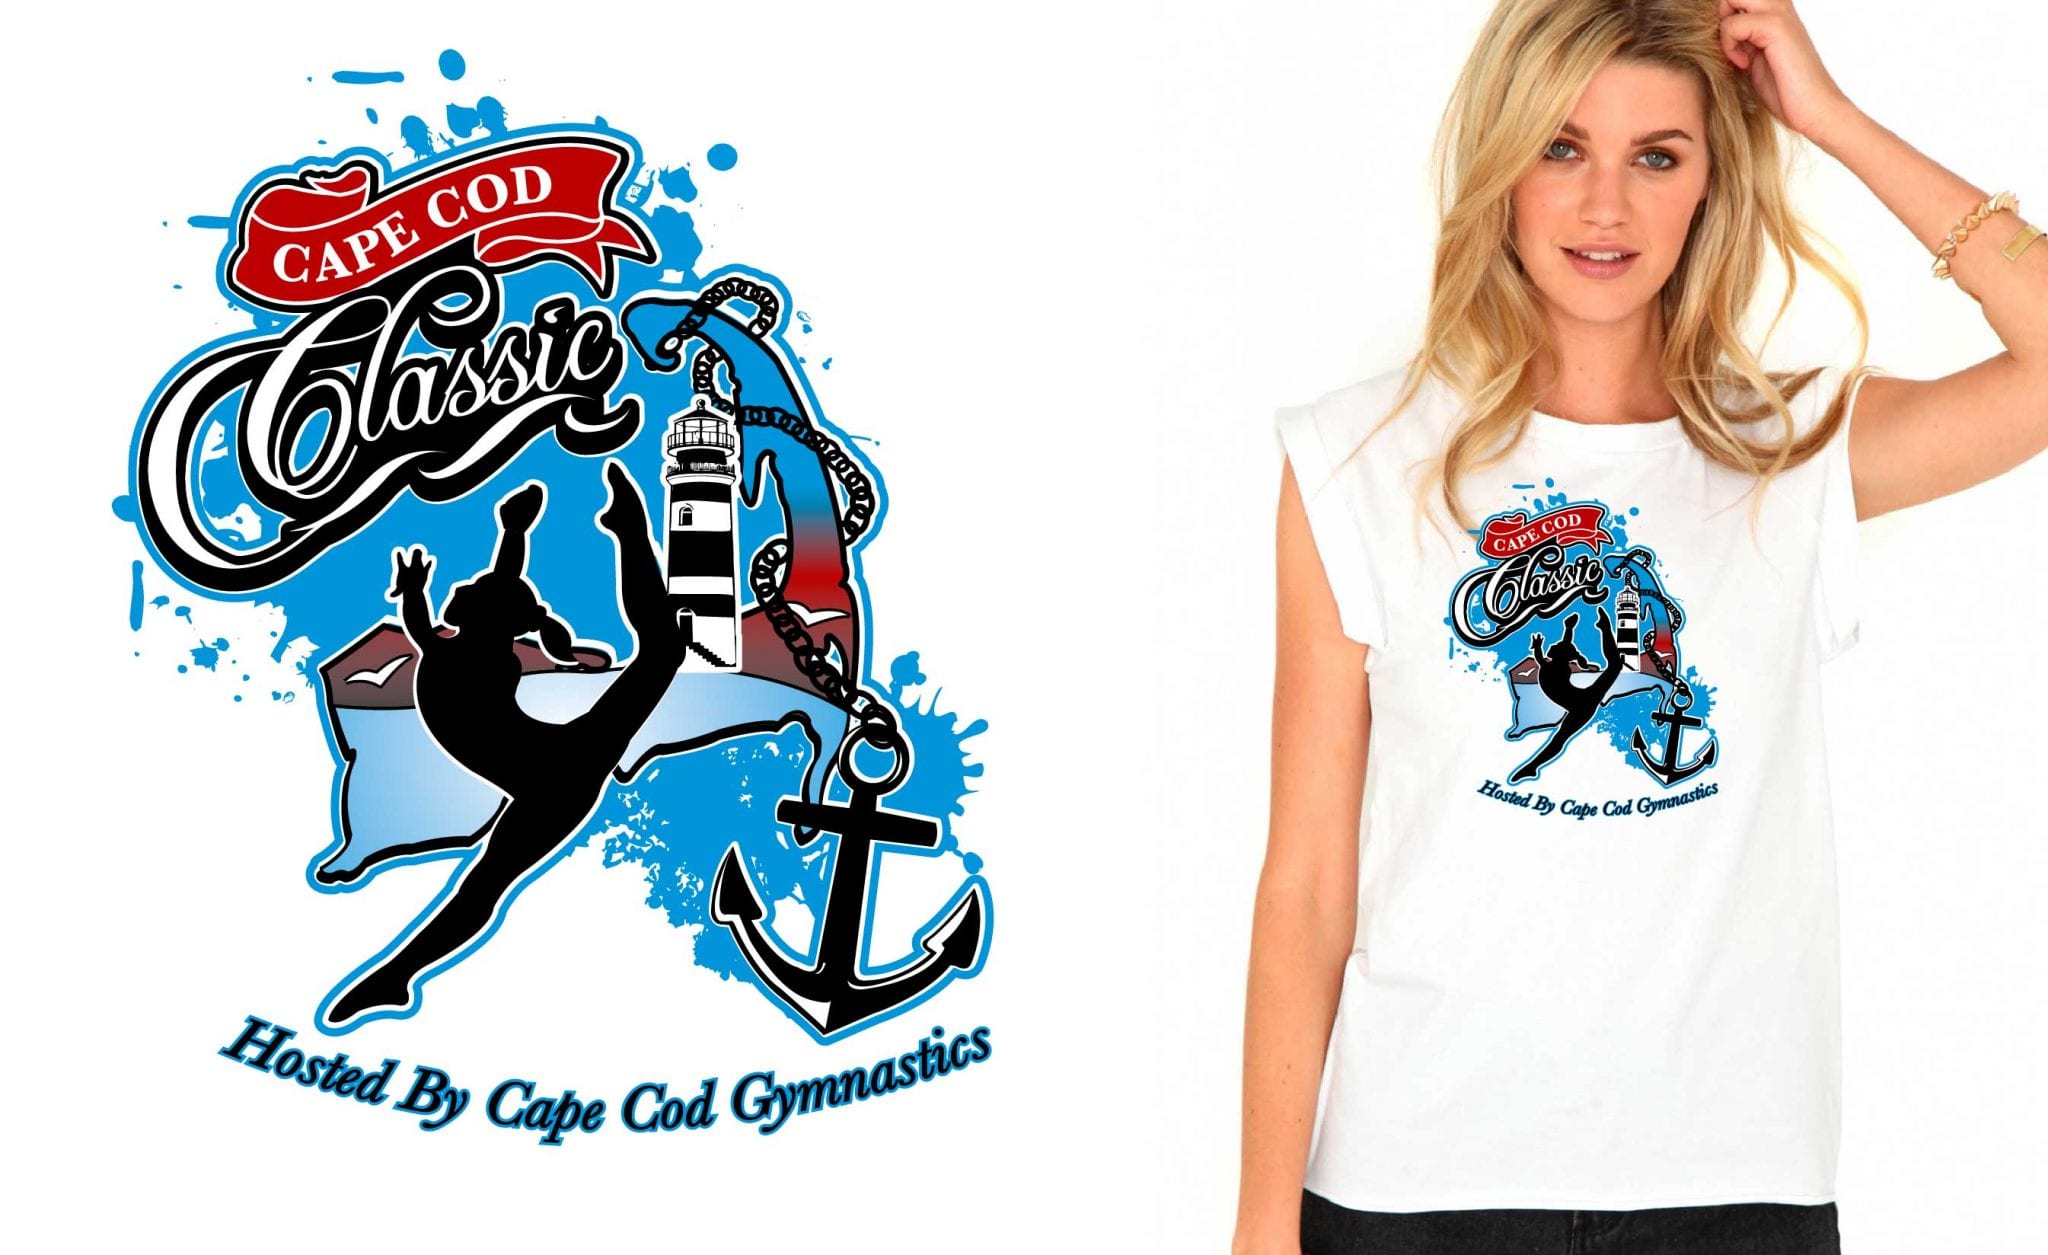 Amazing gymnastic logo design vector art for tshirt 2015 Cape Cod Classic